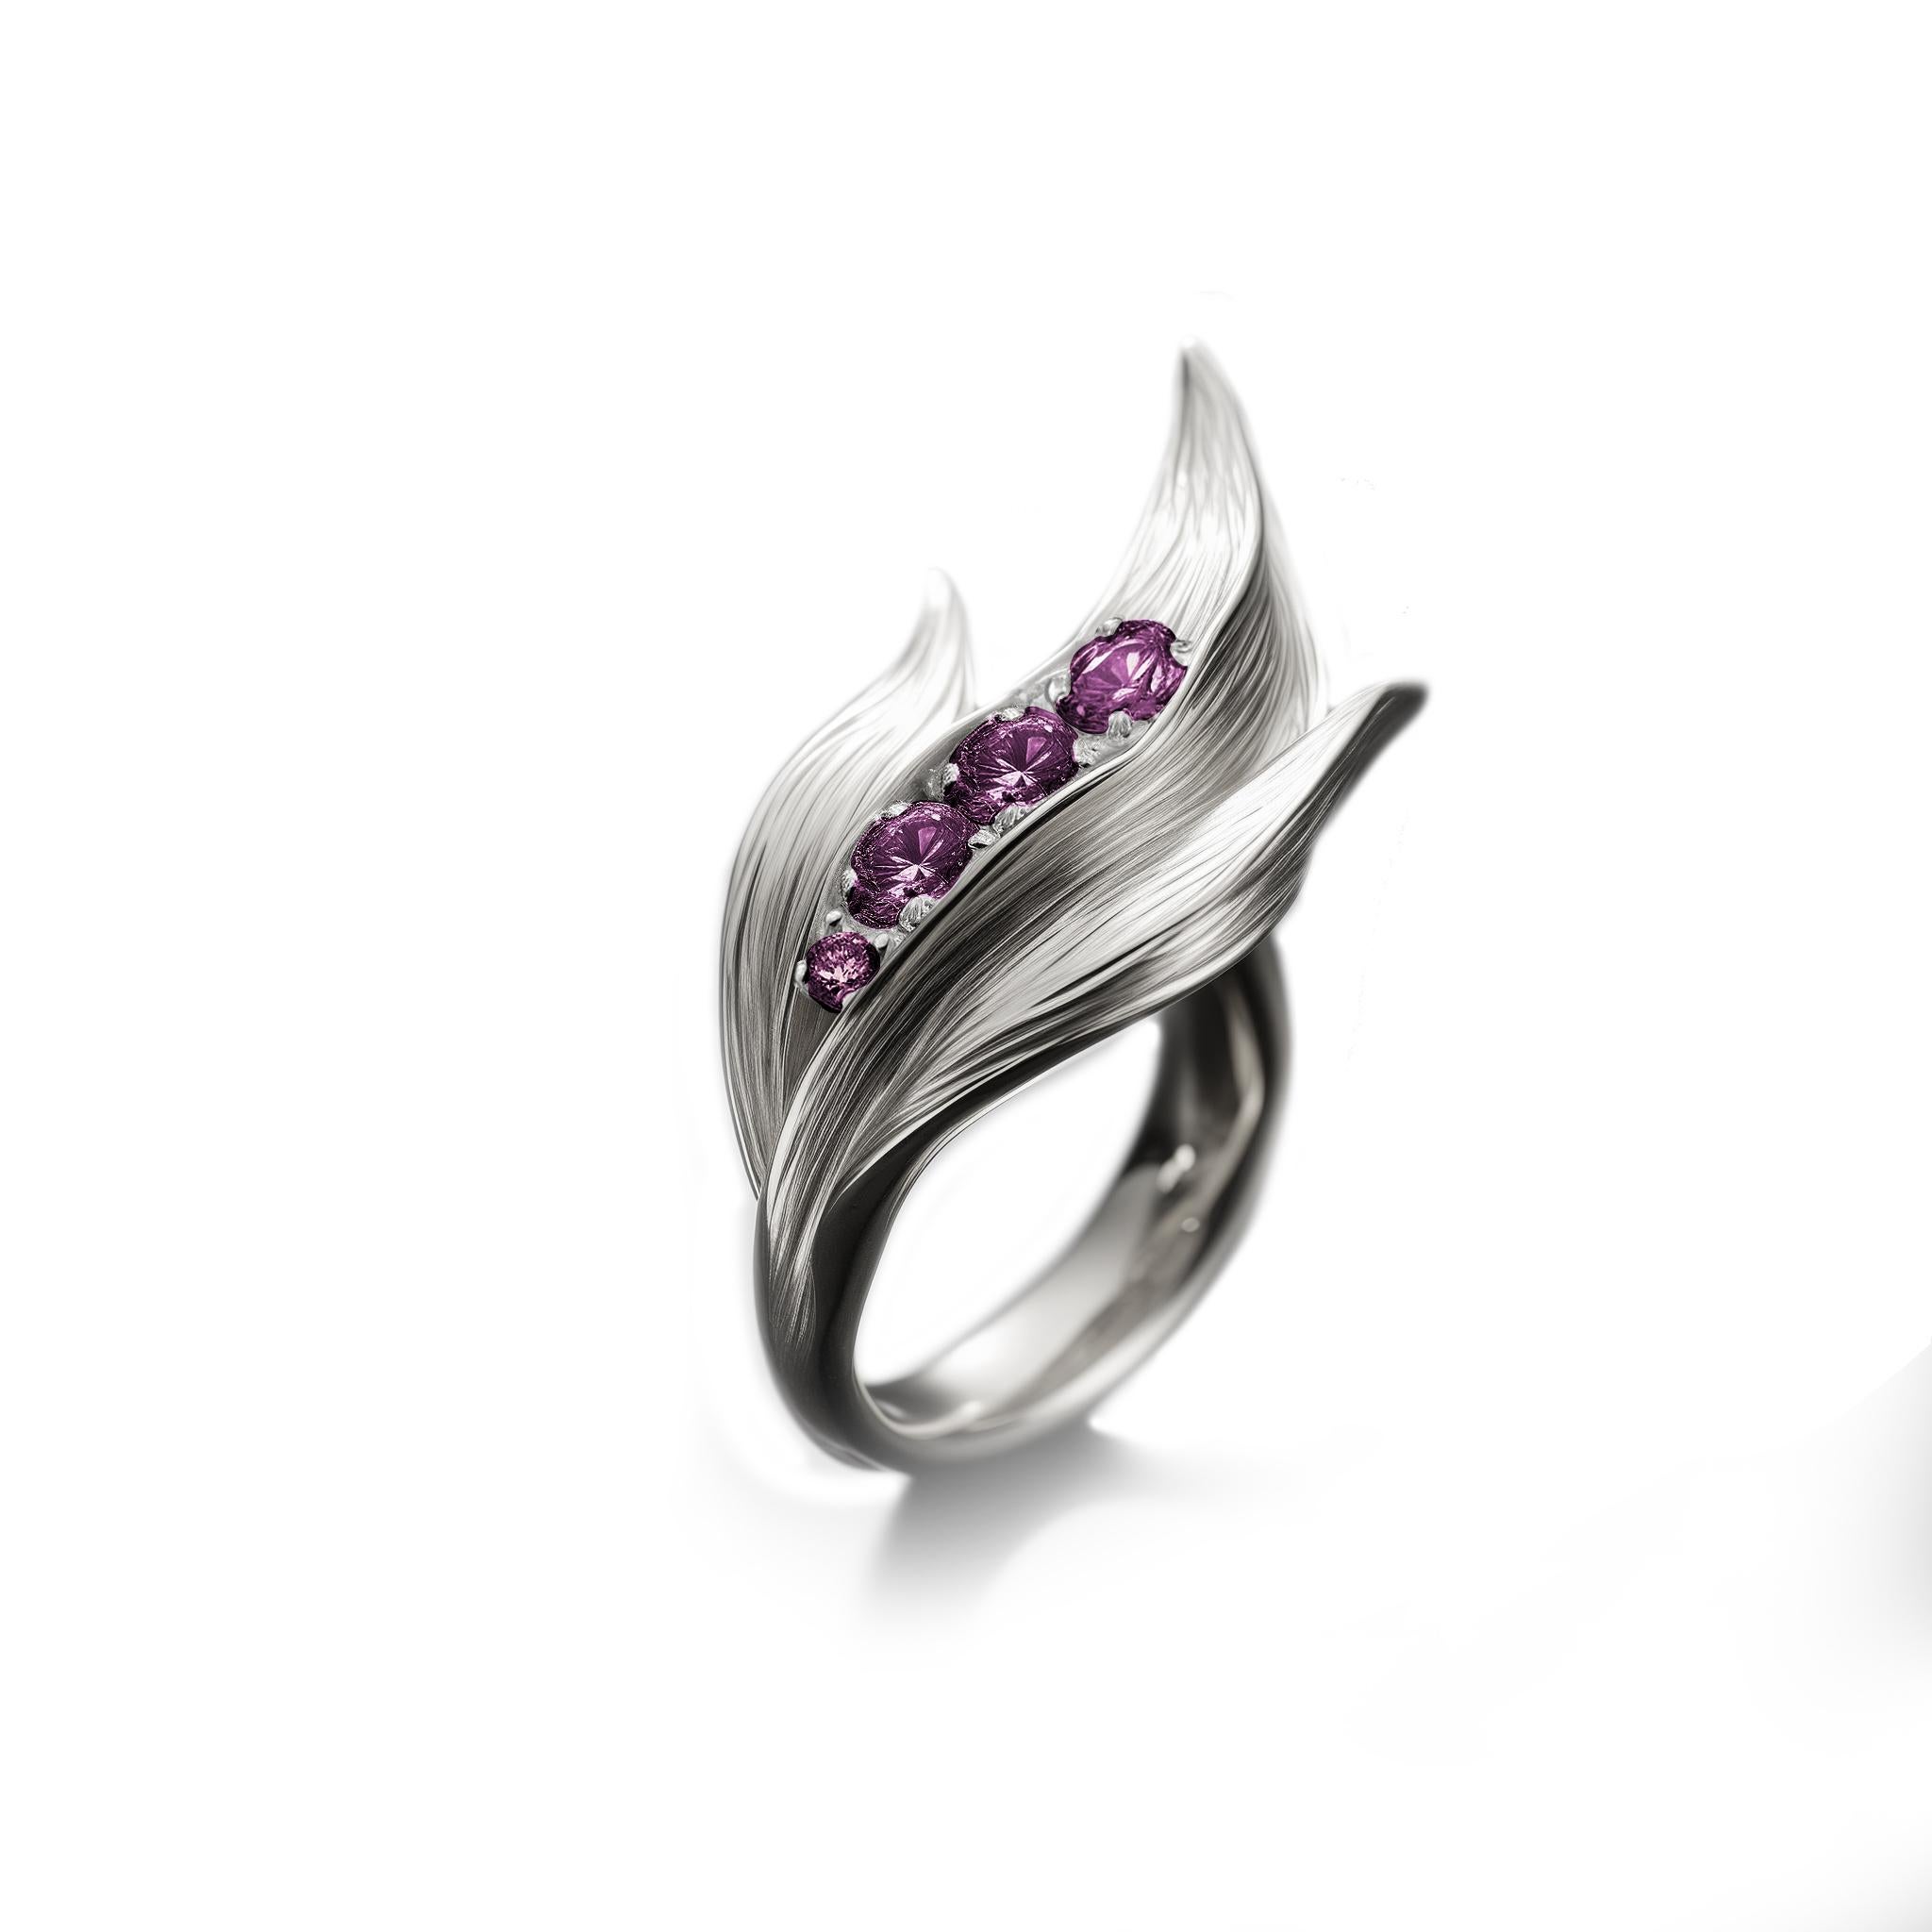 Contemporain The Contemporary Lily of The Valley Ring with Purple Sapphires (bague muguet contemporaine en or blanc avec saphirs violets) en vente